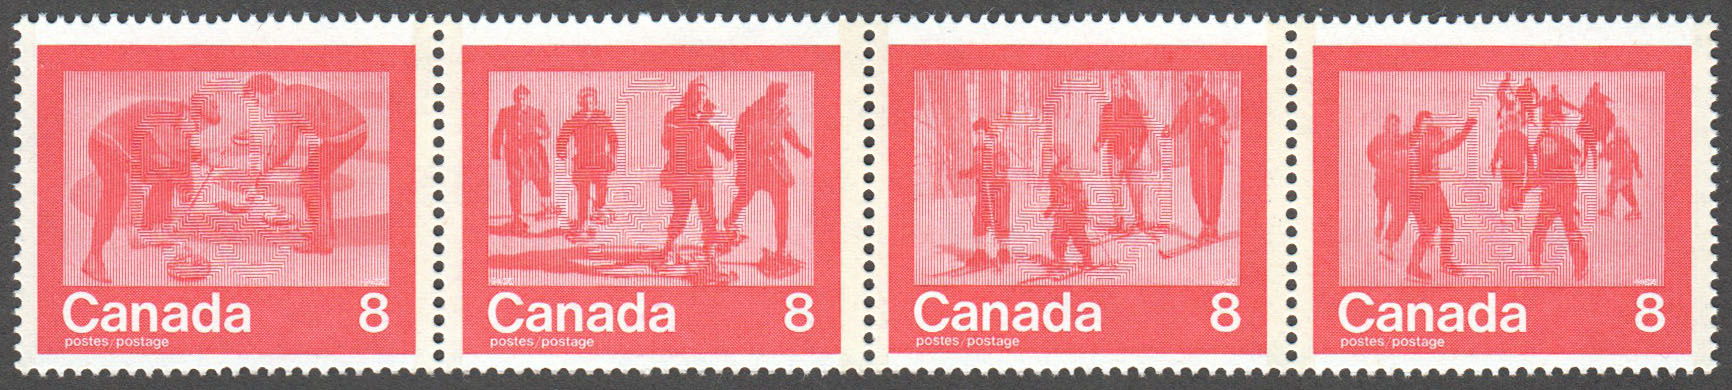 Canada Scott 647a MNH Strip (A10-8) - Click Image to Close